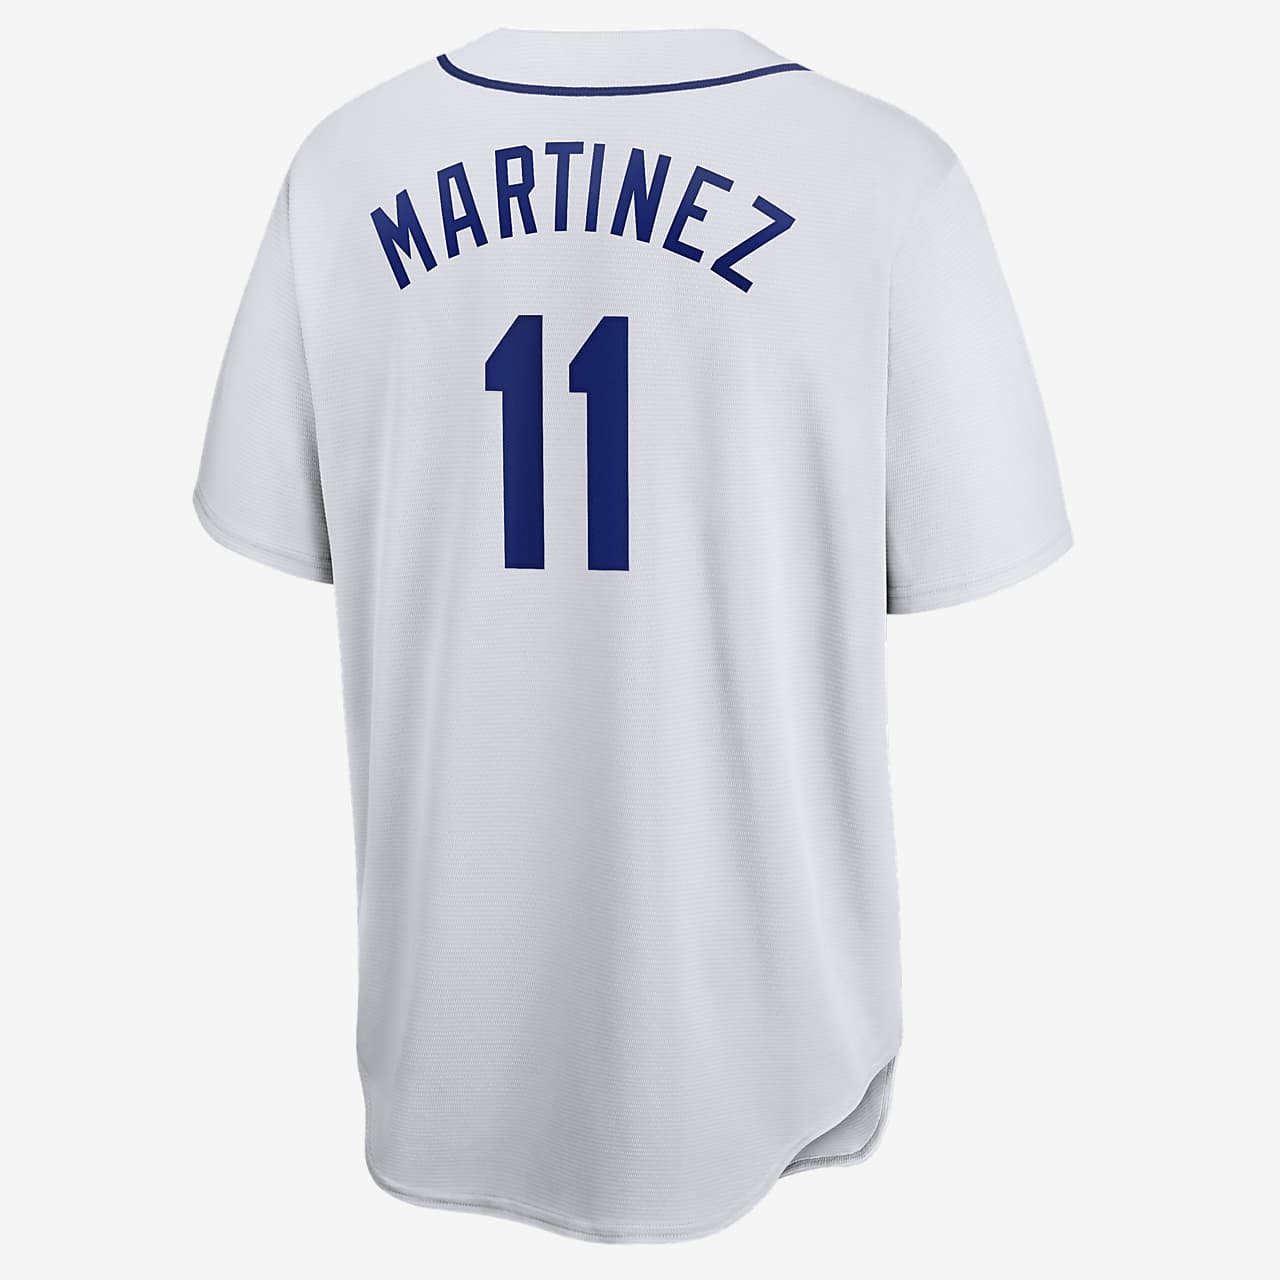 MLB Seattle Mariners (Edgar Martinez) Men's Cooperstown Baseball Jersey.